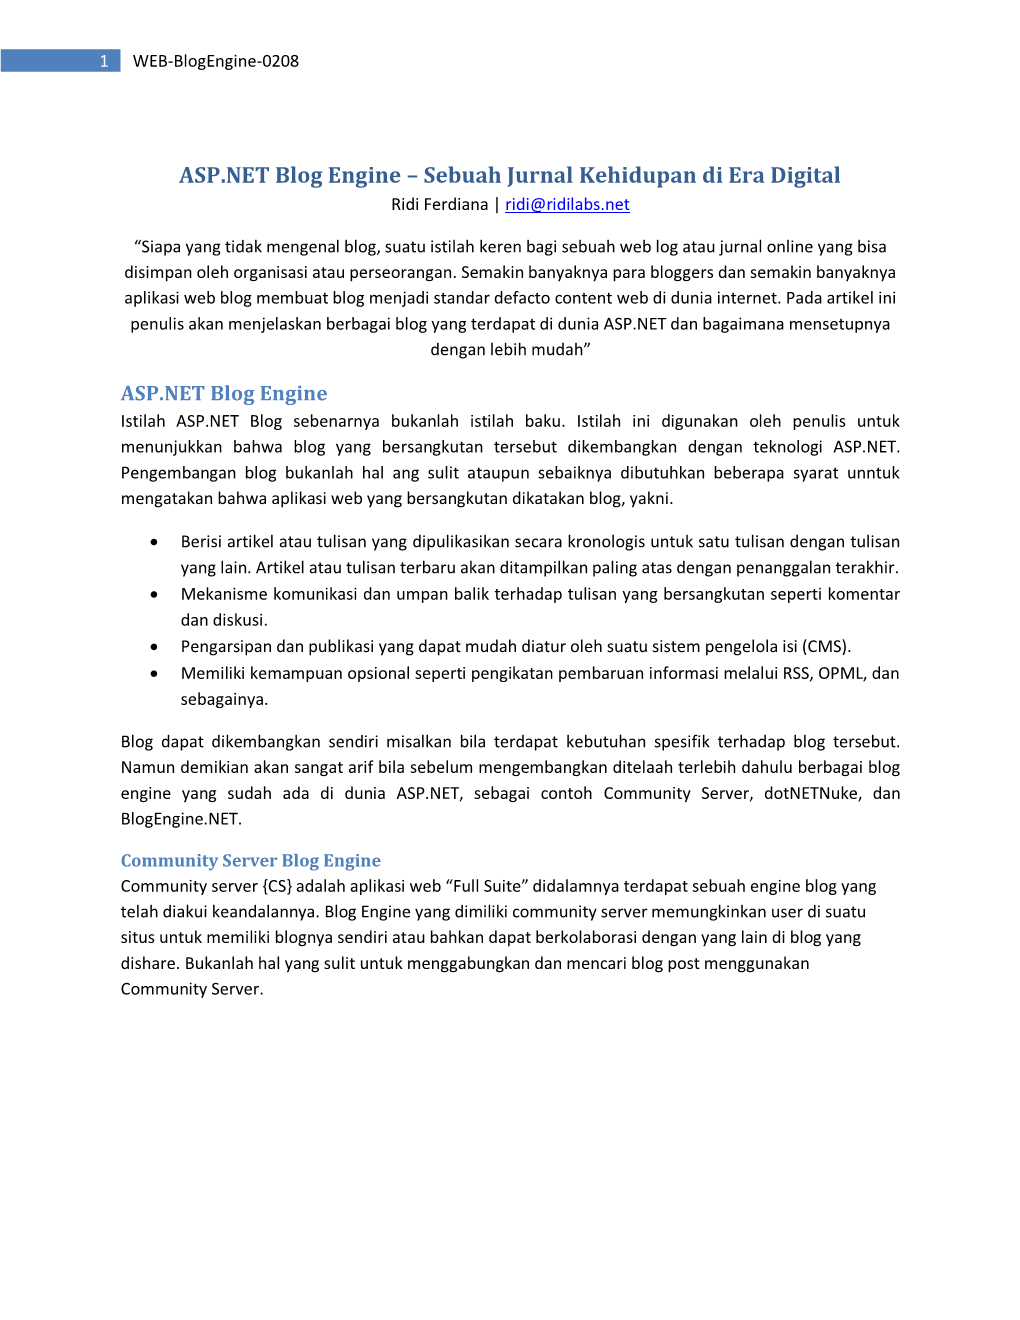 ASP.NET Blog Engine – Sebuah Jurnal Kehidupan Di Era Digital Ridi Ferdiana | Ridi@Ridilabs.Net